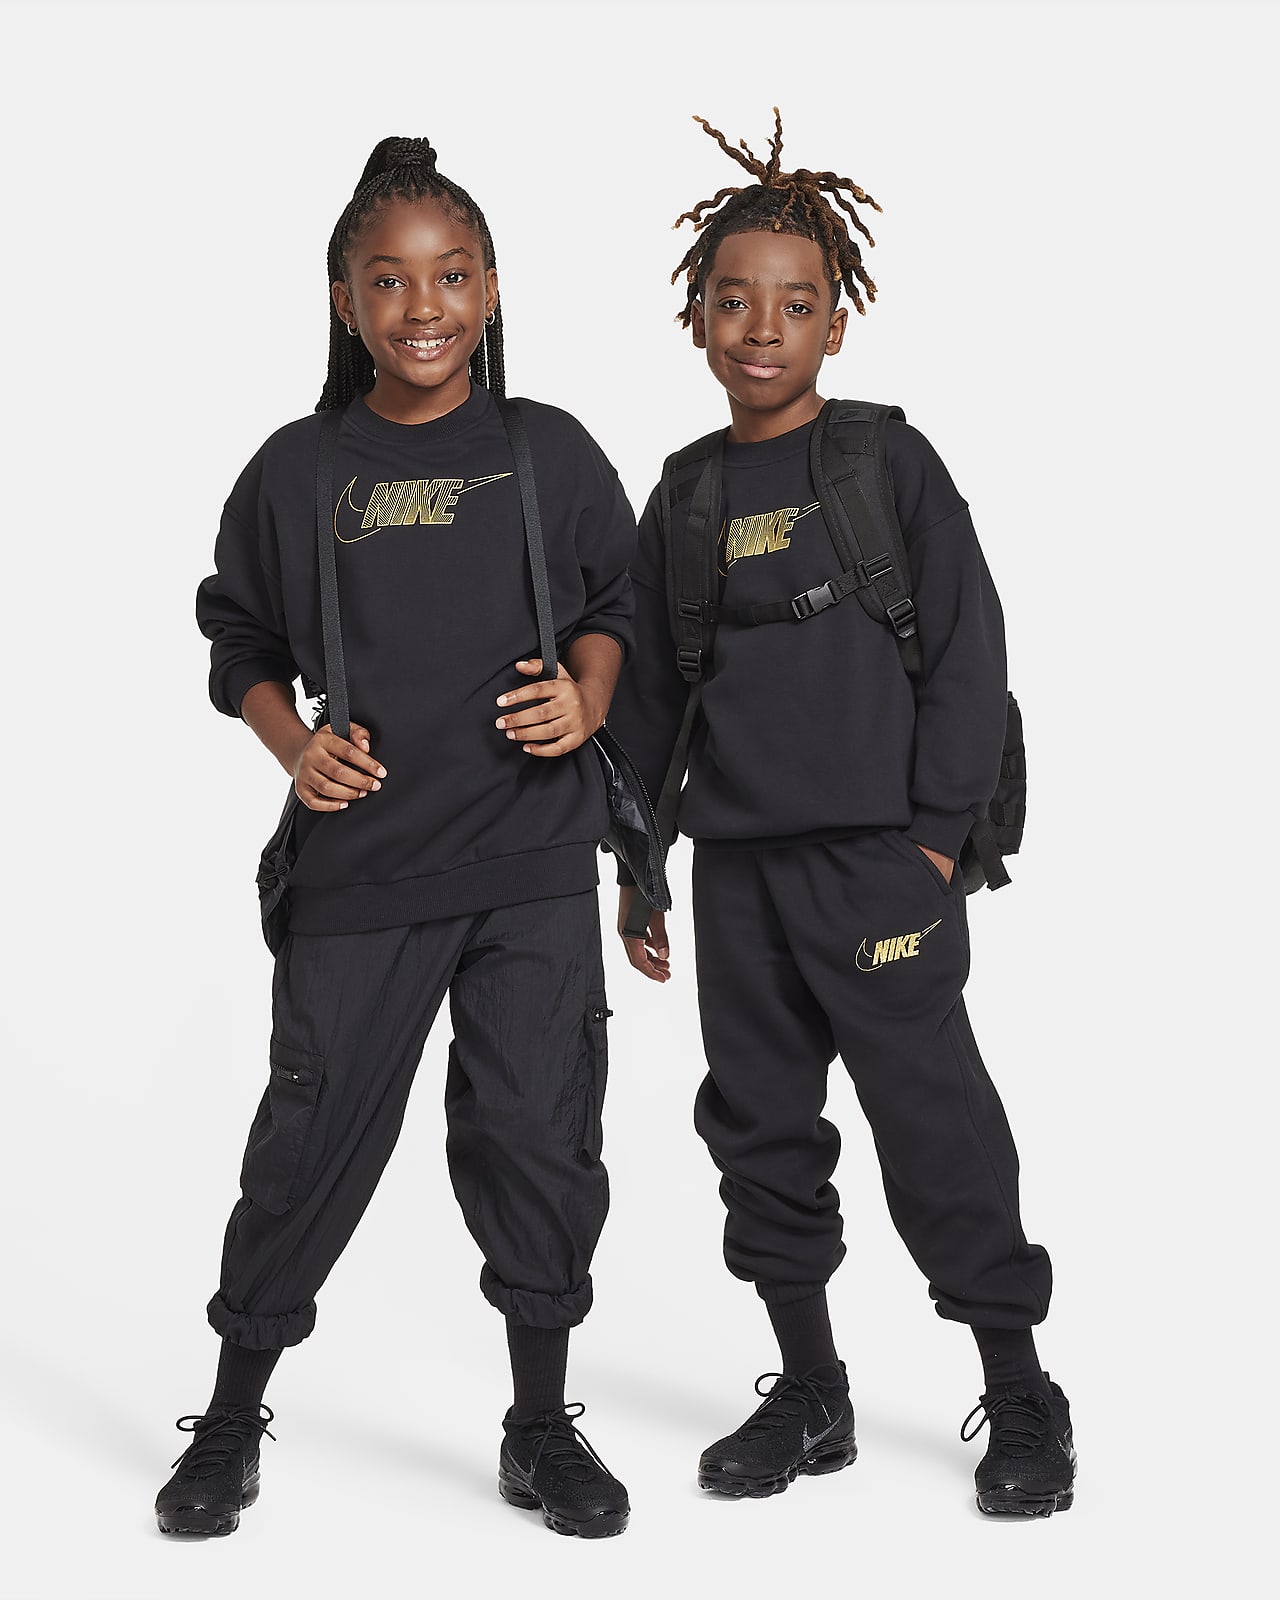 Nike Toddler Girls' 4-6X Printed Club Jumpsuit